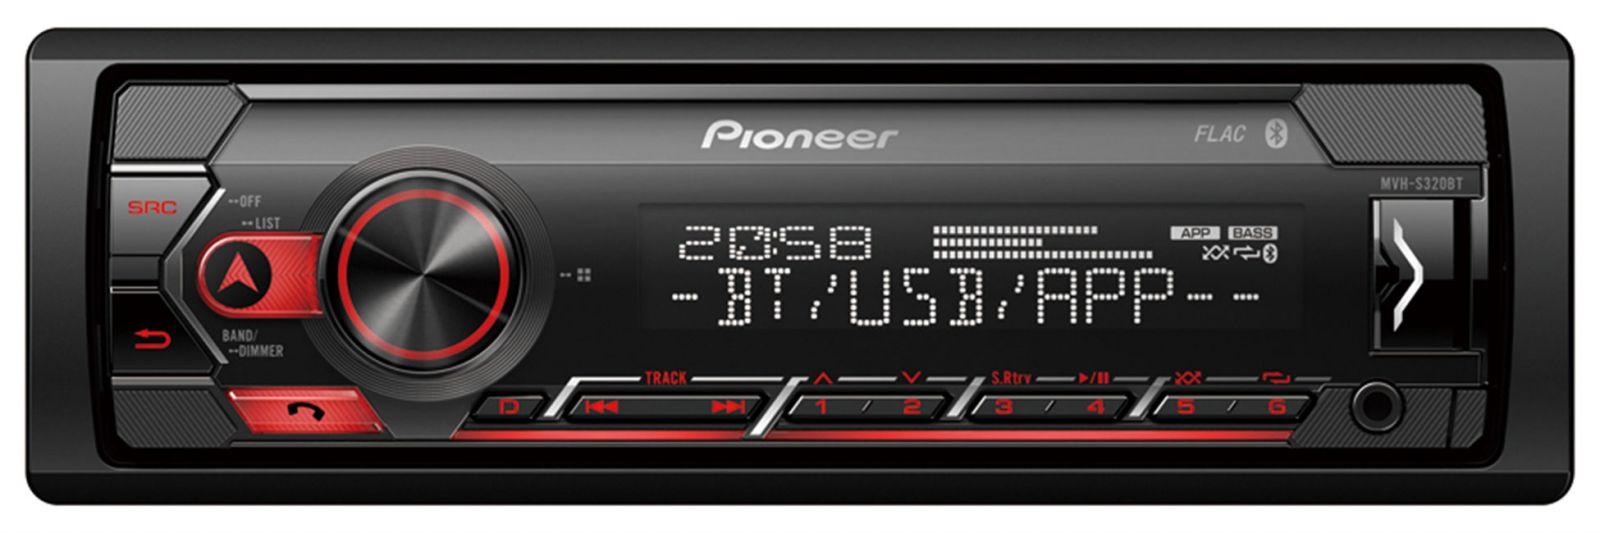 Pioneer MVH-S300BT - MP3-Autoradio mit Bluetooth / USB / iPod / AUX-IN